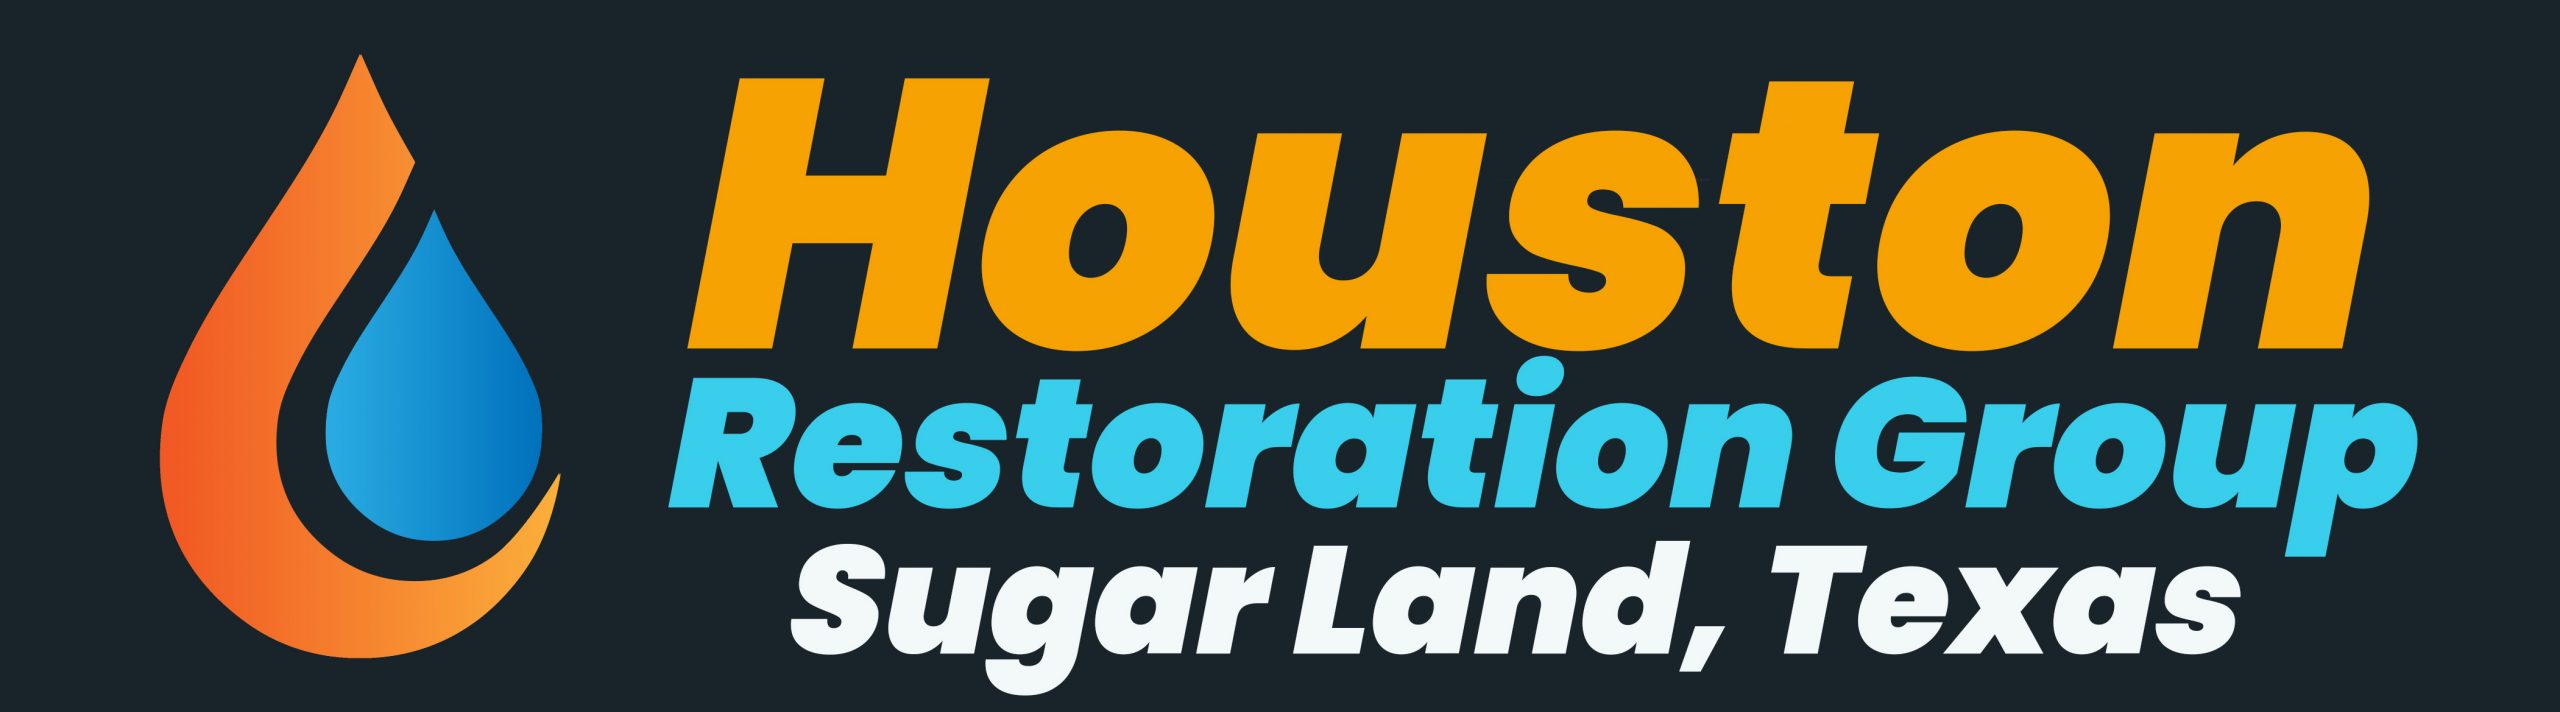 Houston Restoration Group Sugar Land's Logo